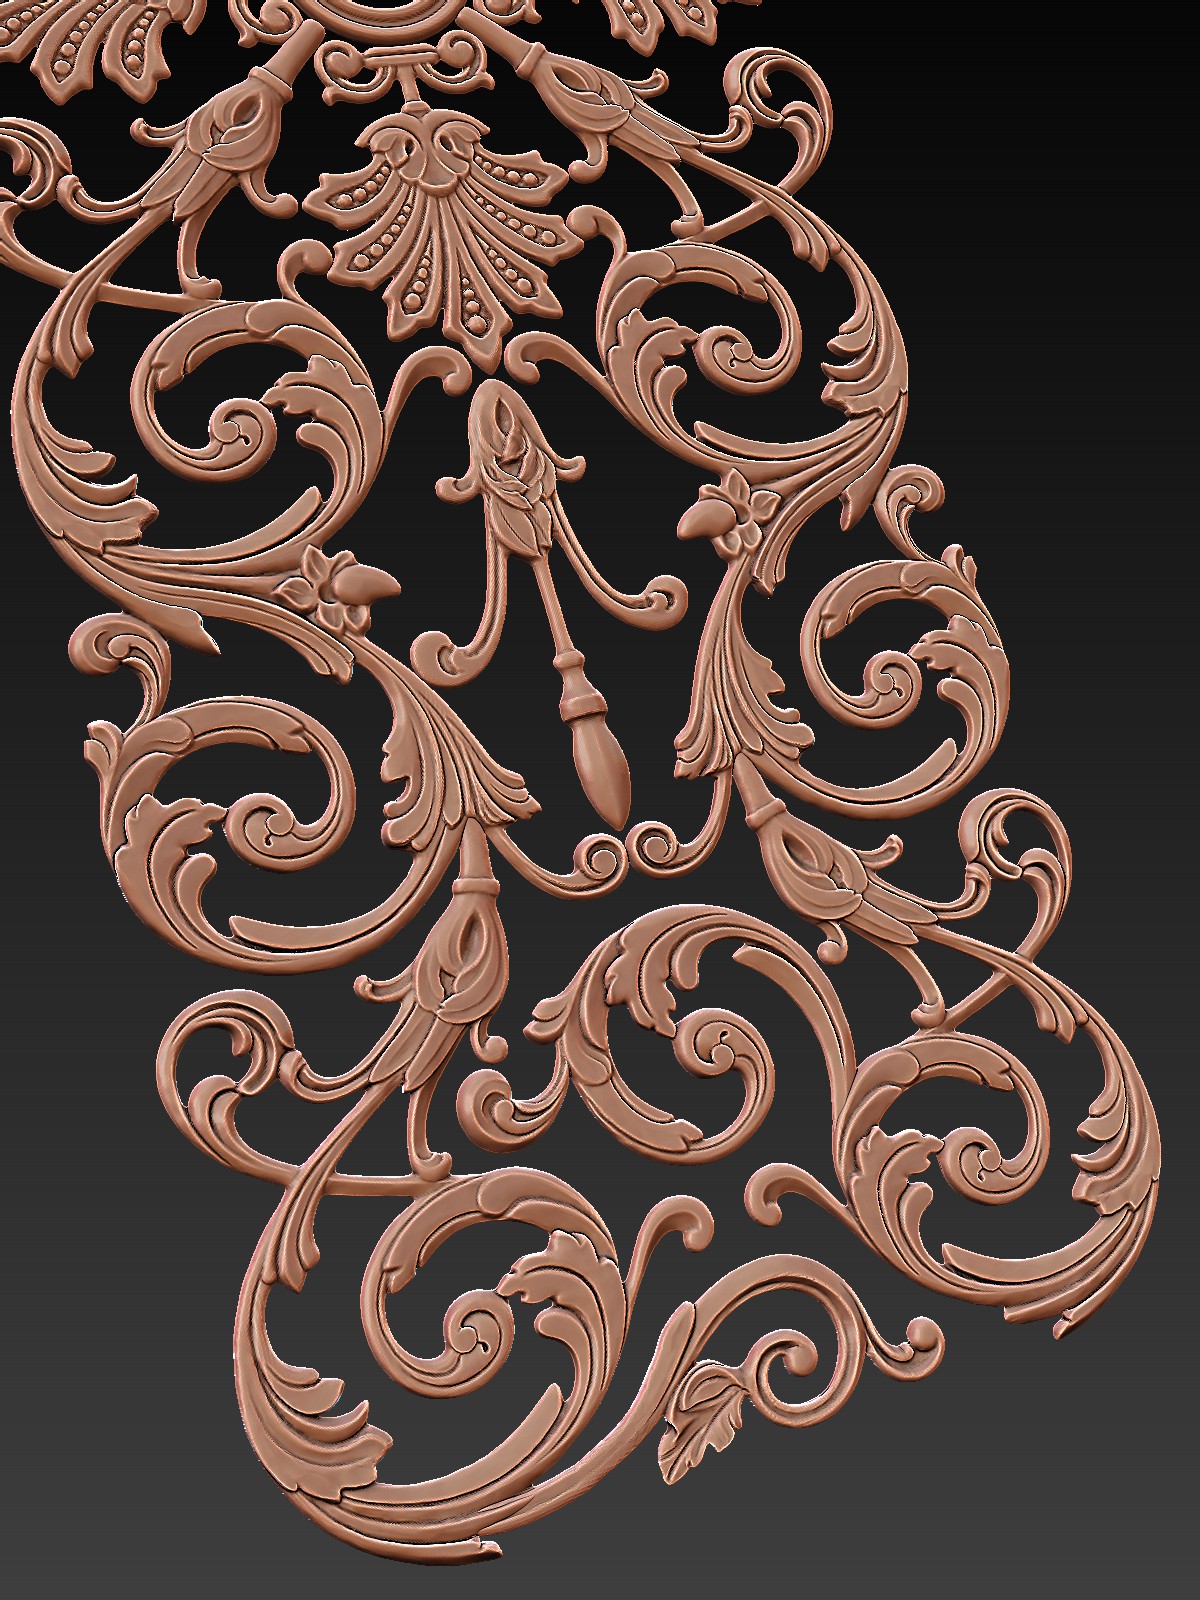 Digital sculpting of decorative elements for custom furniture. 3D Models for Production.